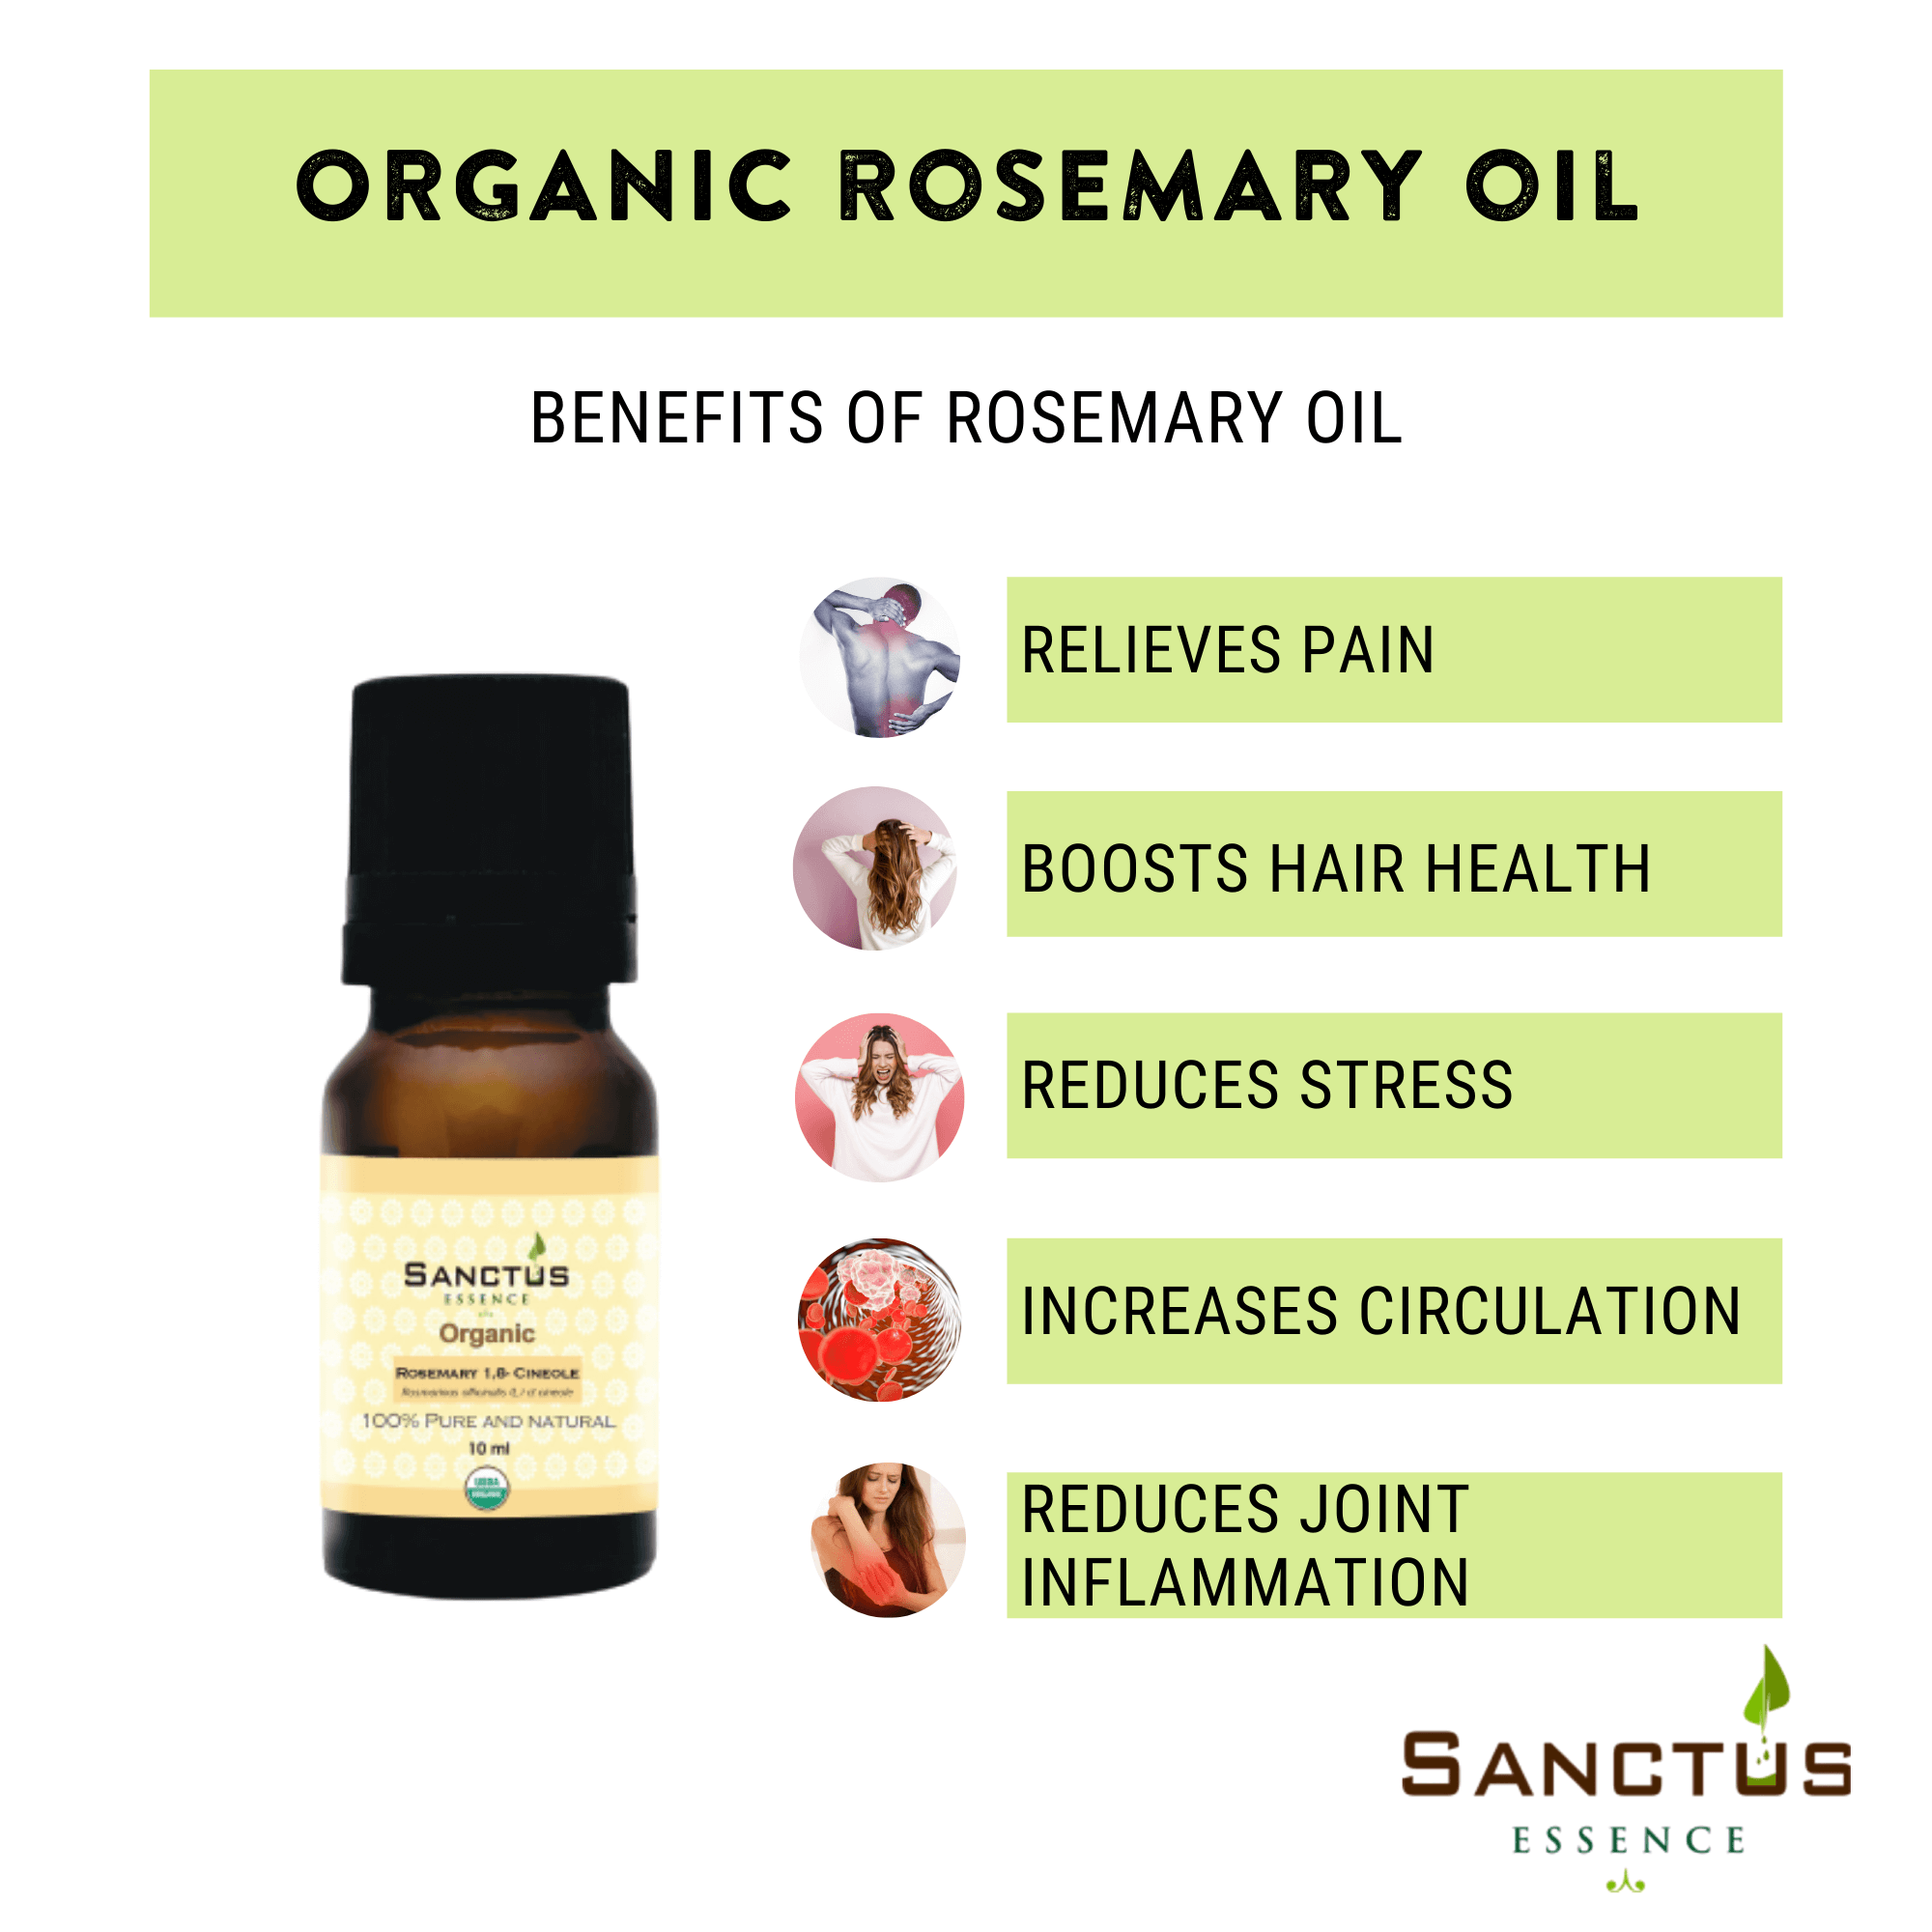 Organic Rosemary Cineole Essential Oil - Born to Bio - Born to Bio